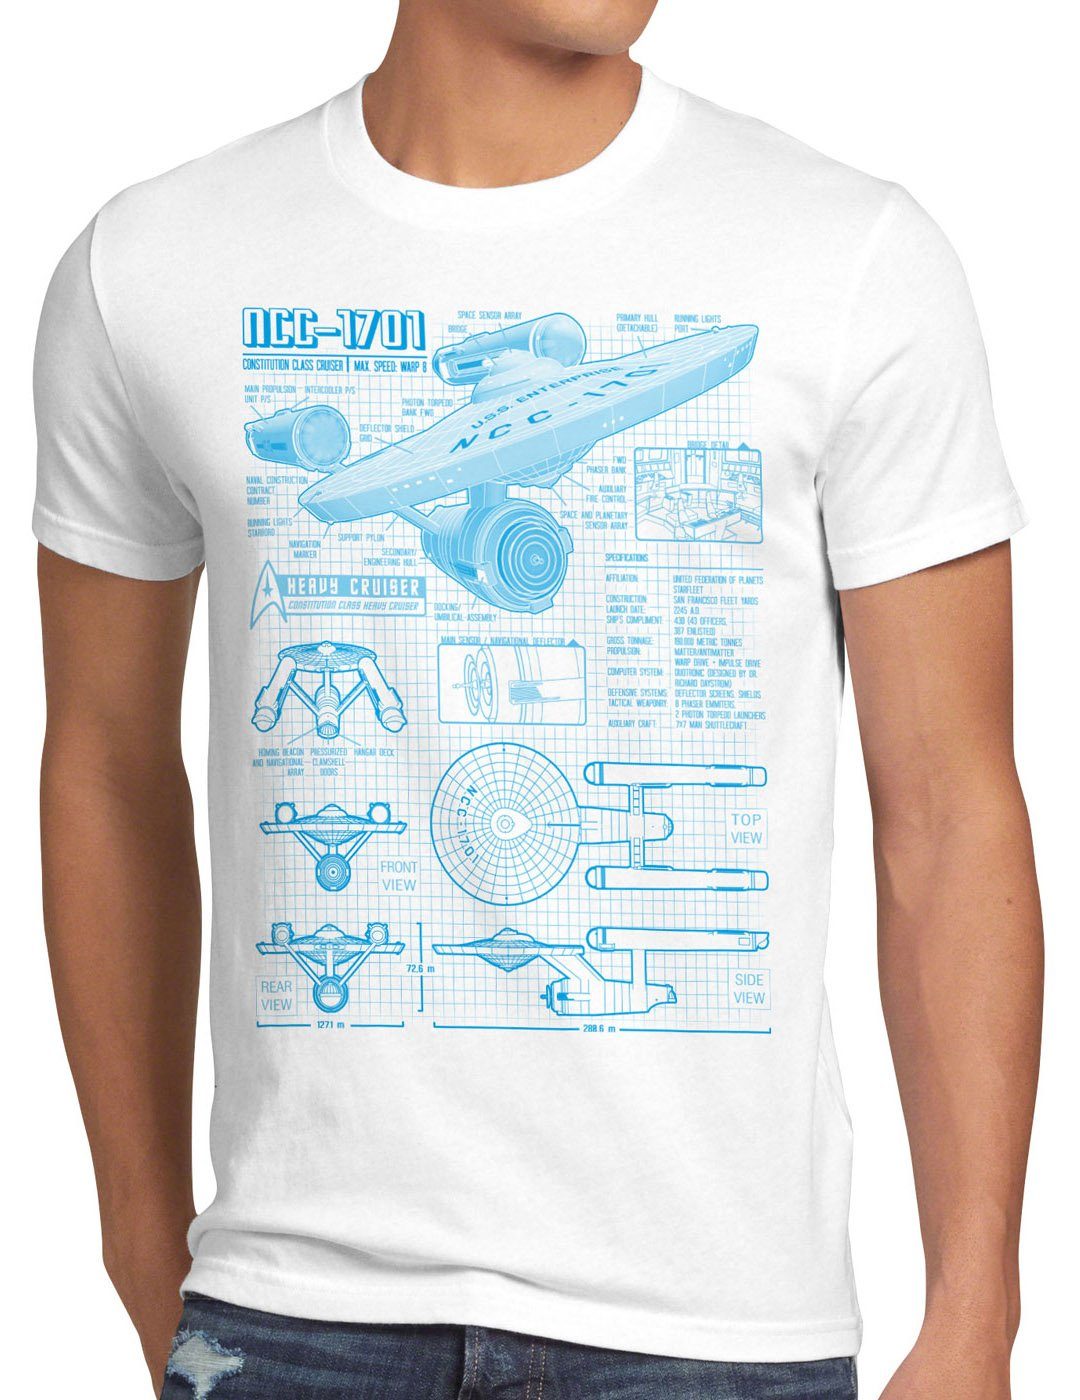 sternenflotte NCC-1701 Print-Shirt style3 Herren pike trek christopher klingon trekkie T-Shirt star weiß